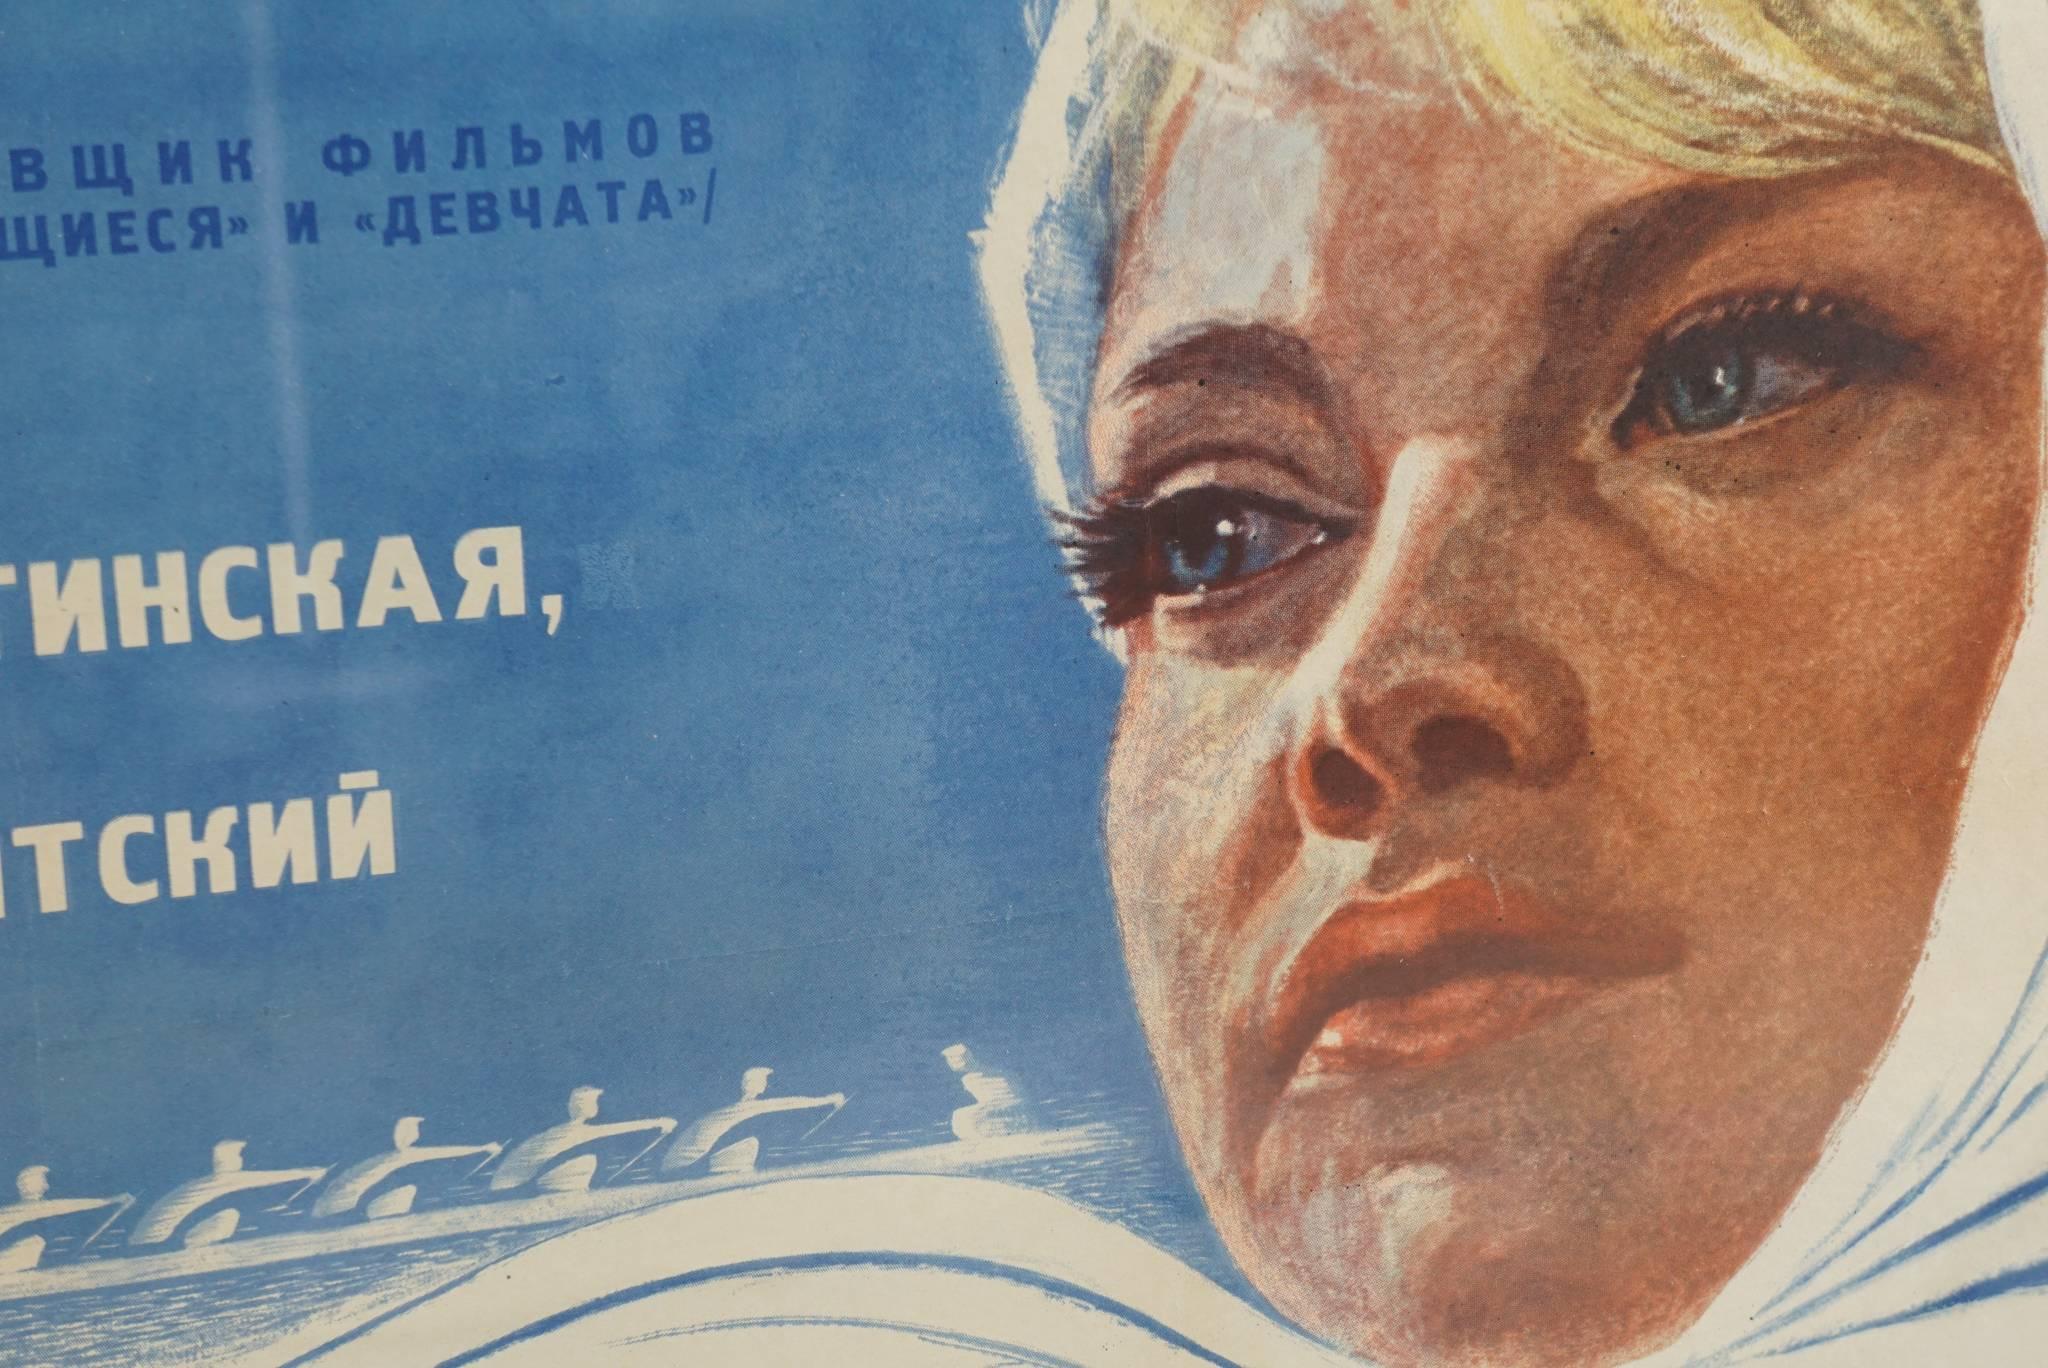 1966 Russian Film Poster: Royal Regatta 1